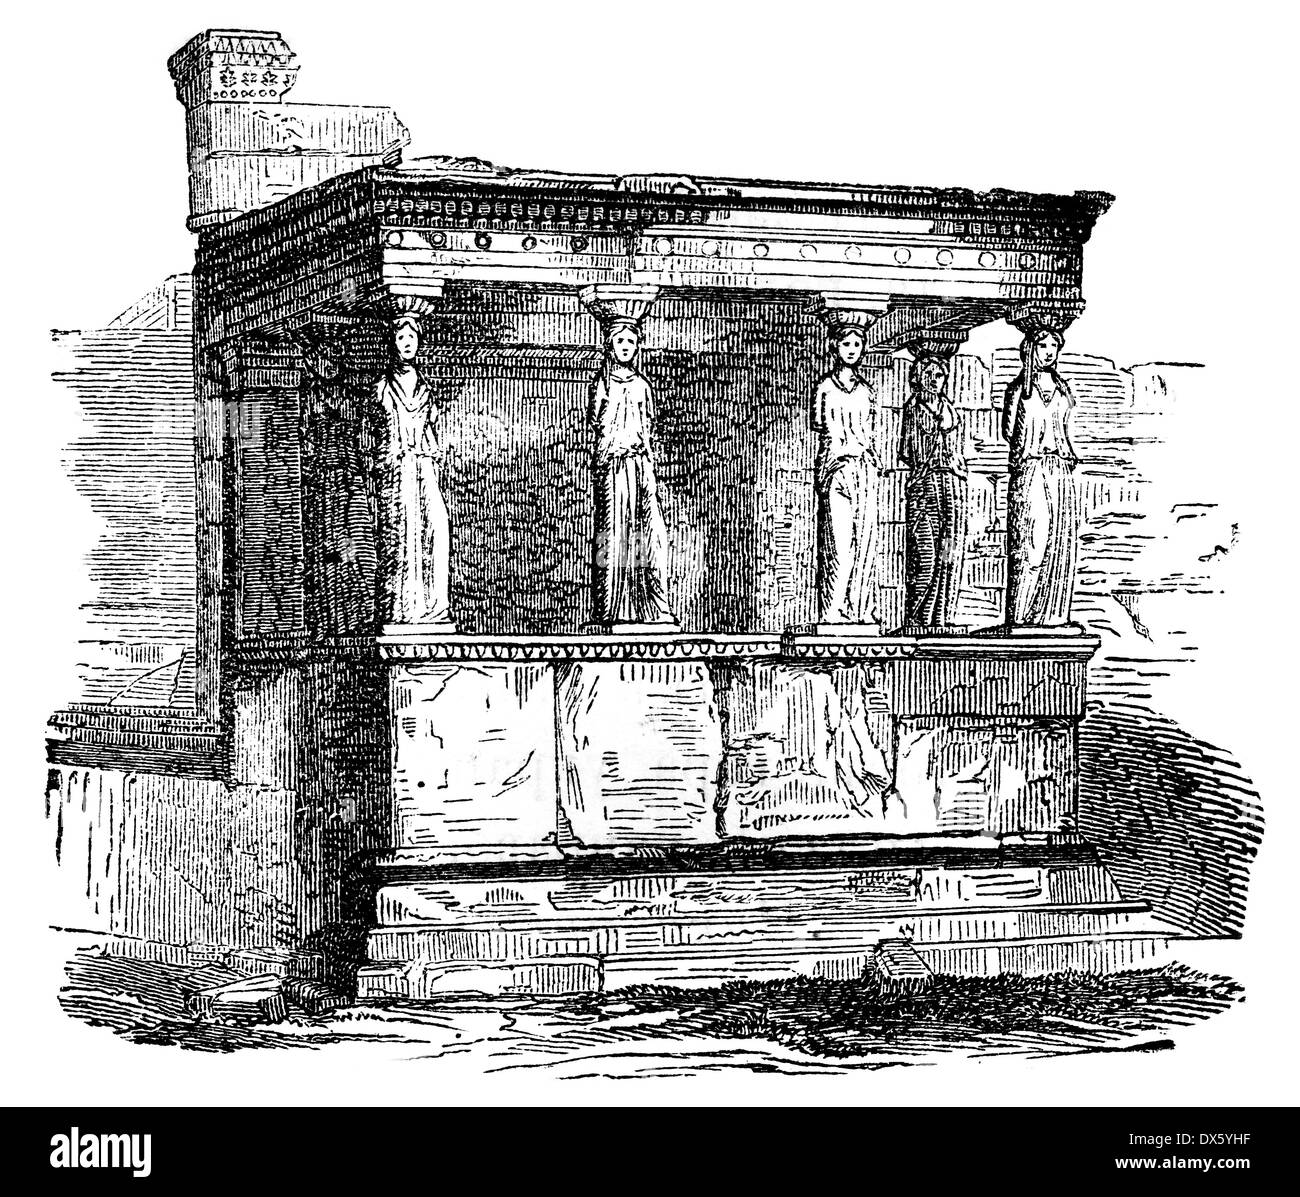 Veranda der Karyatiden, Erechtheion Tempels, Athen, Griechenland, Illustration aus Buch datiert 1878 Stockfoto